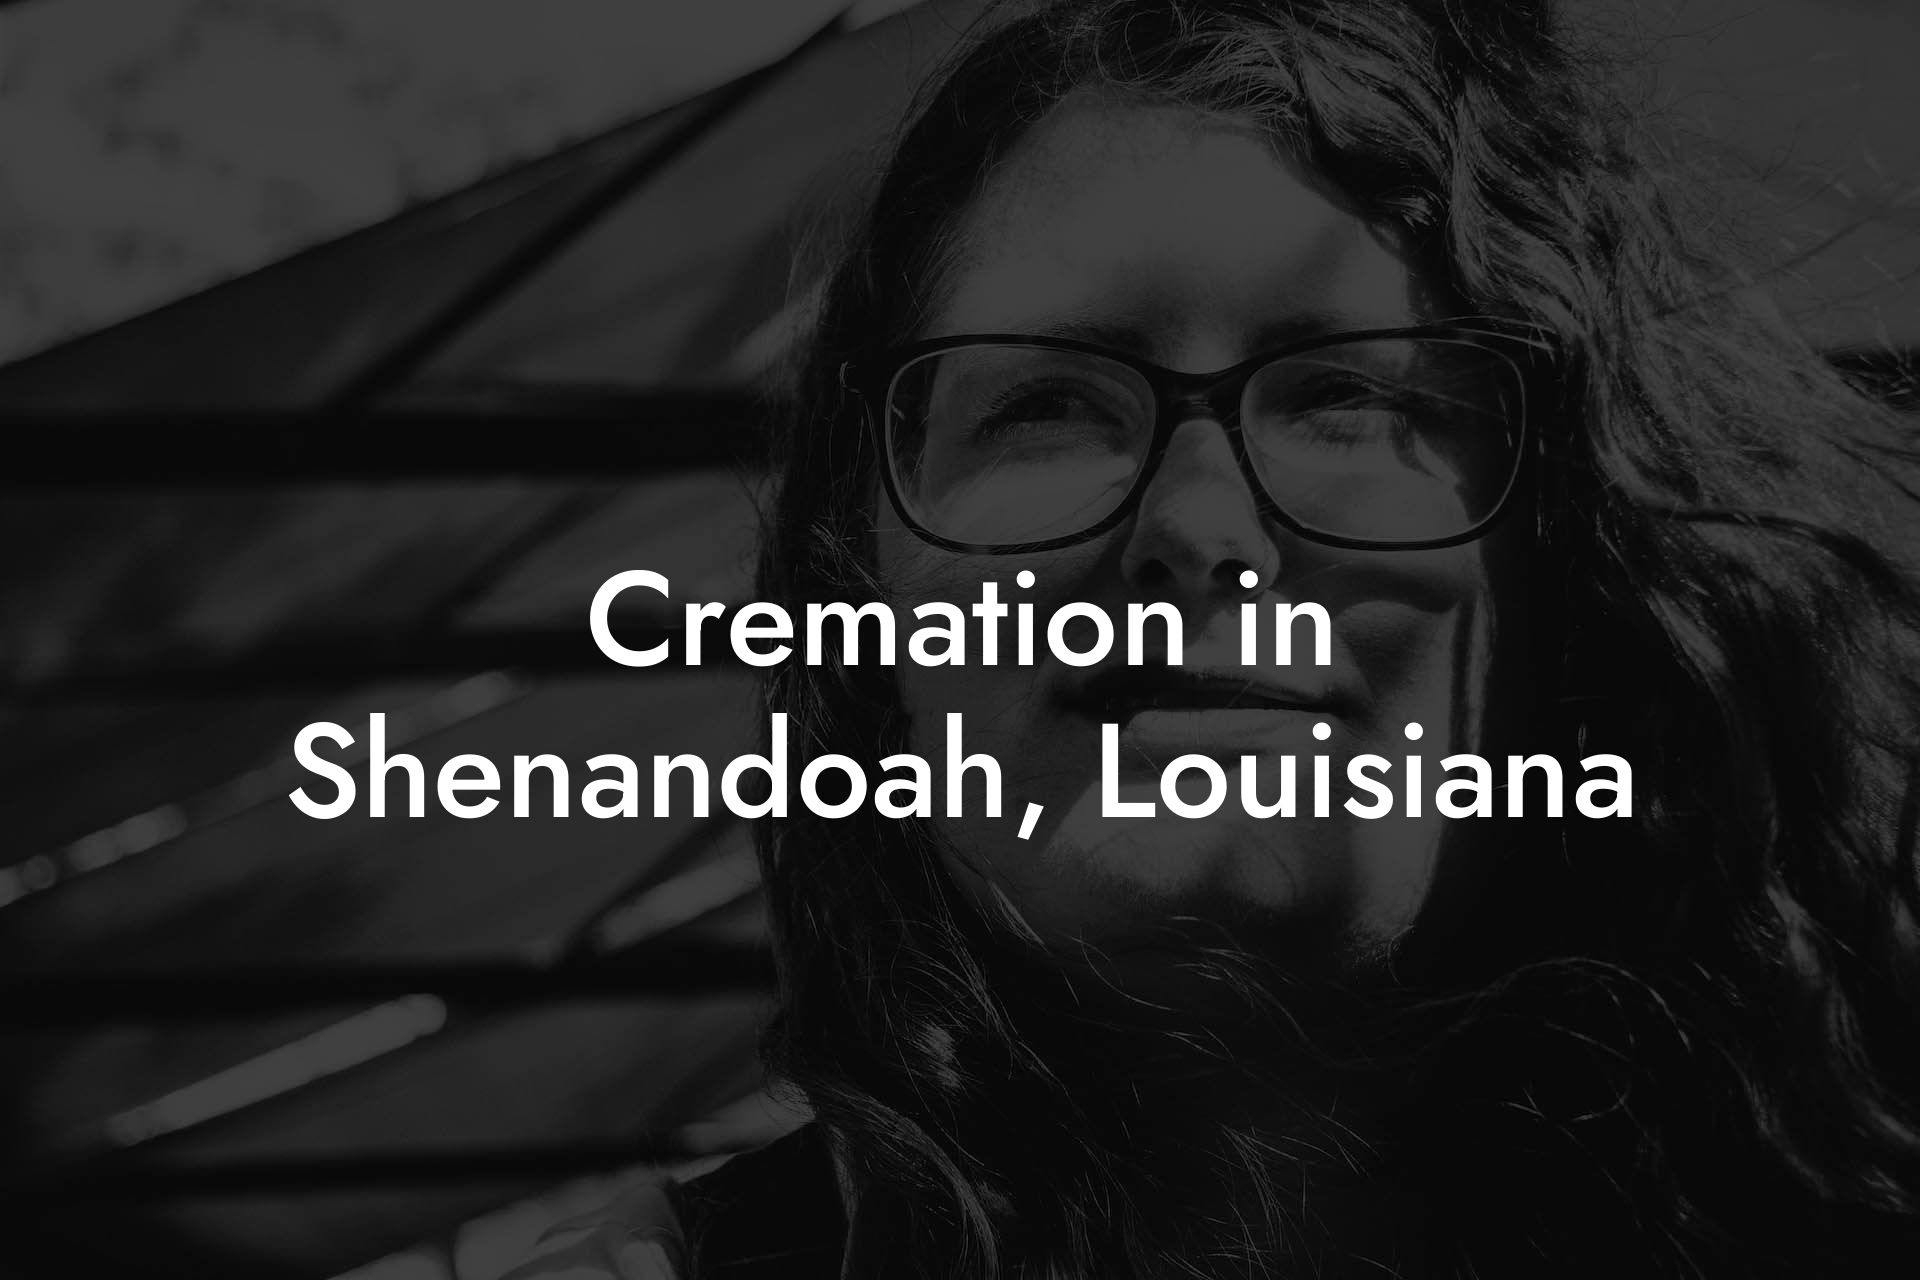 Cremation in Shenandoah, Louisiana